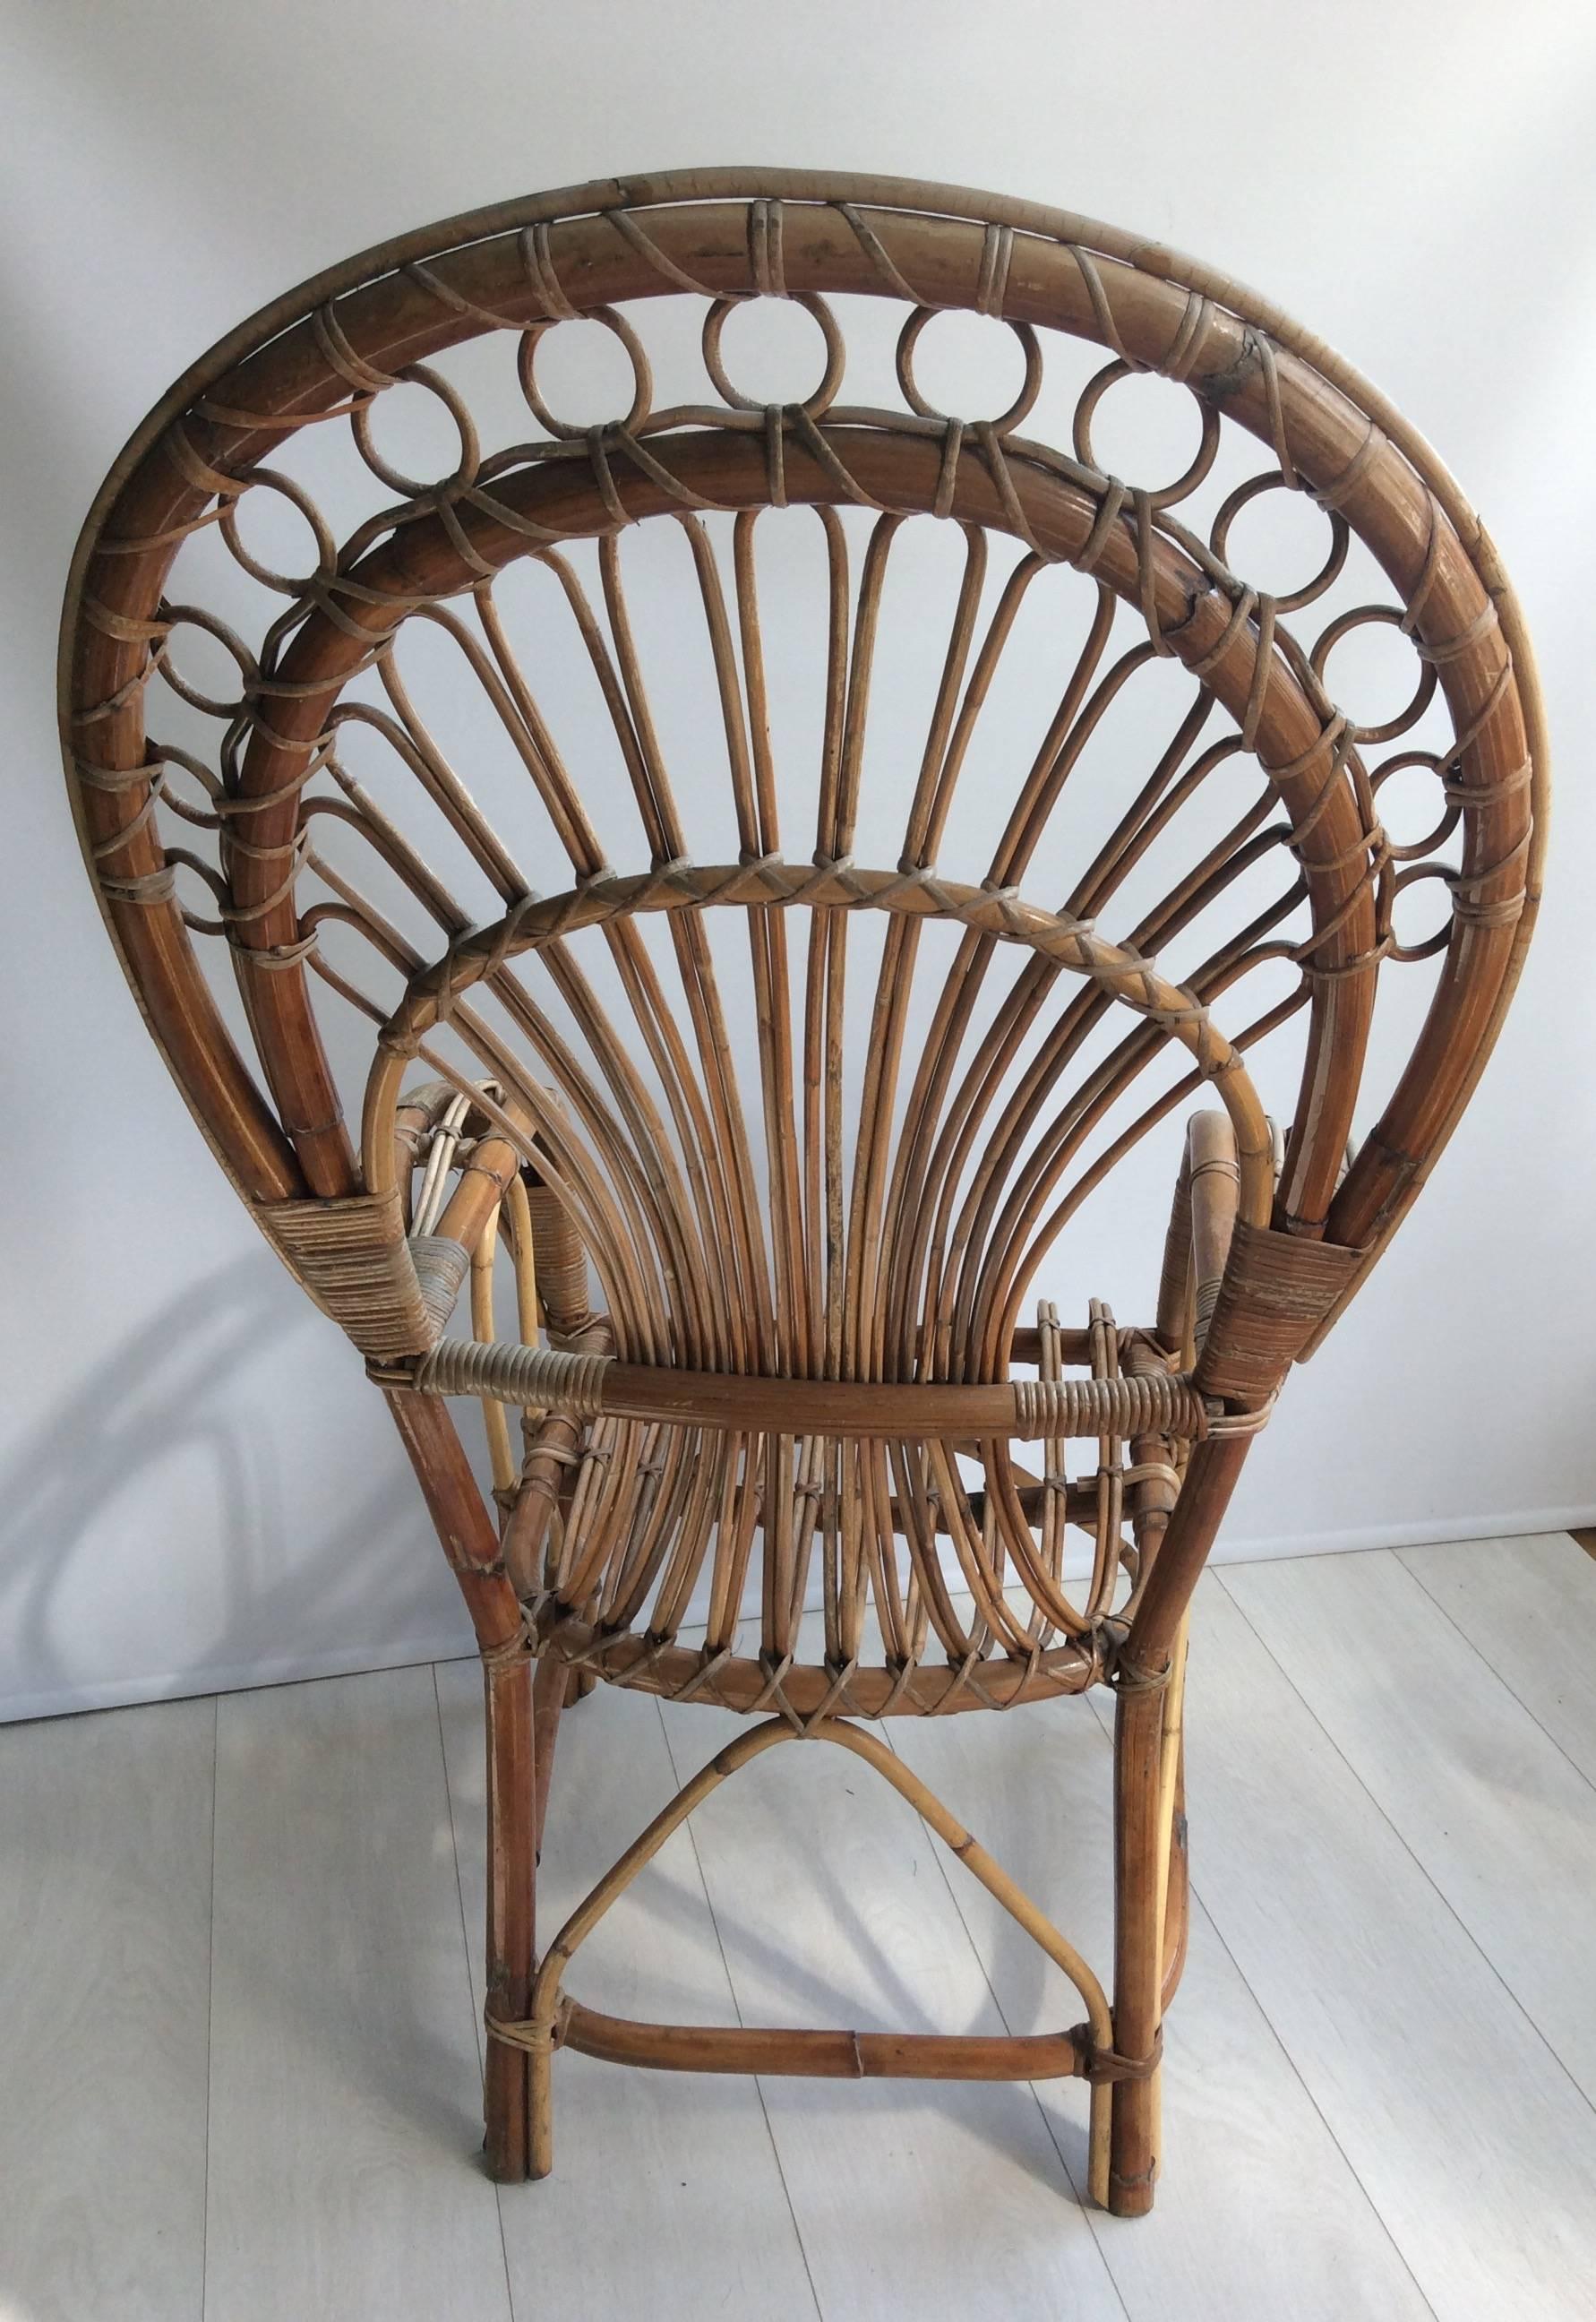 1970 peacock chair